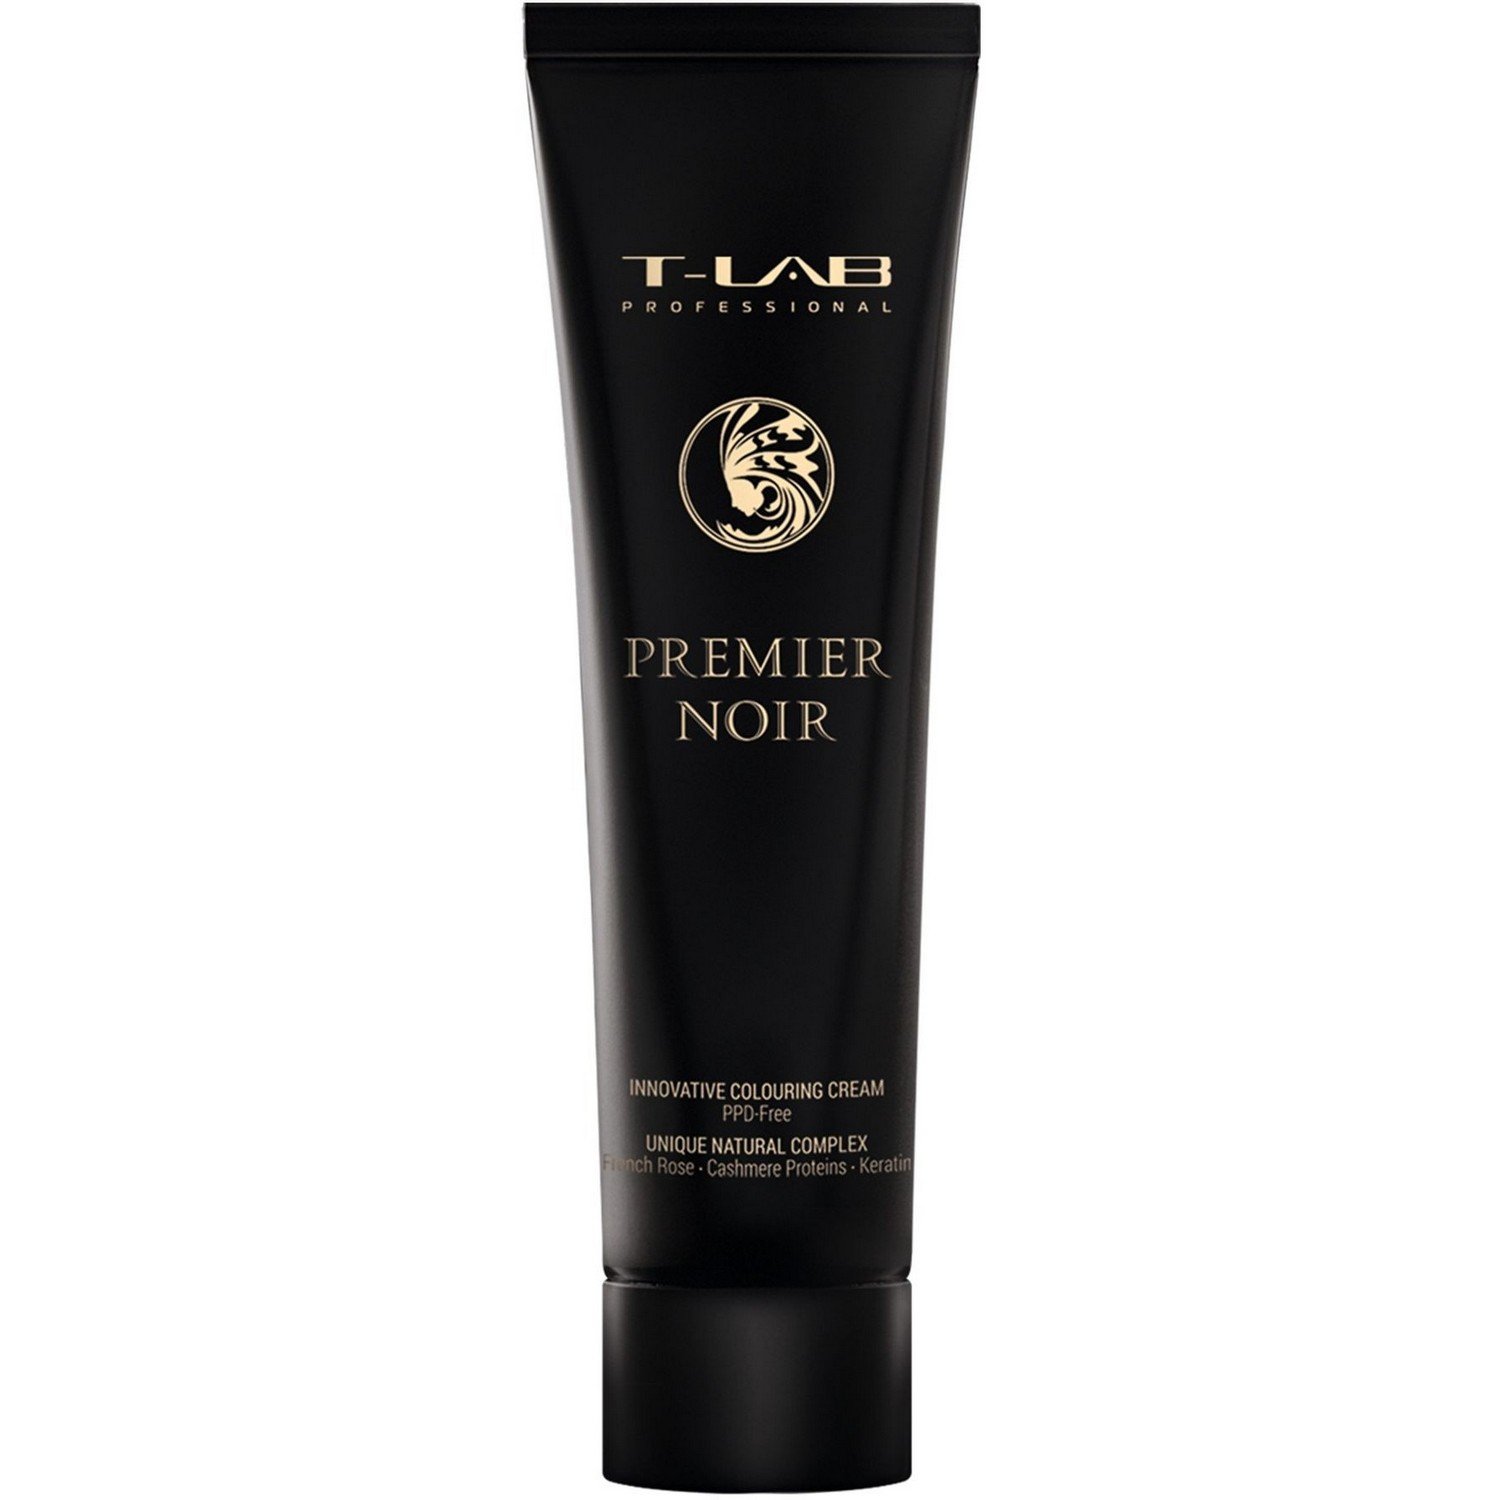 Крем-краска T-LAB Professional Premier Noir colouring cream, оттенок 3.0 (natural dark brown) - фото 1